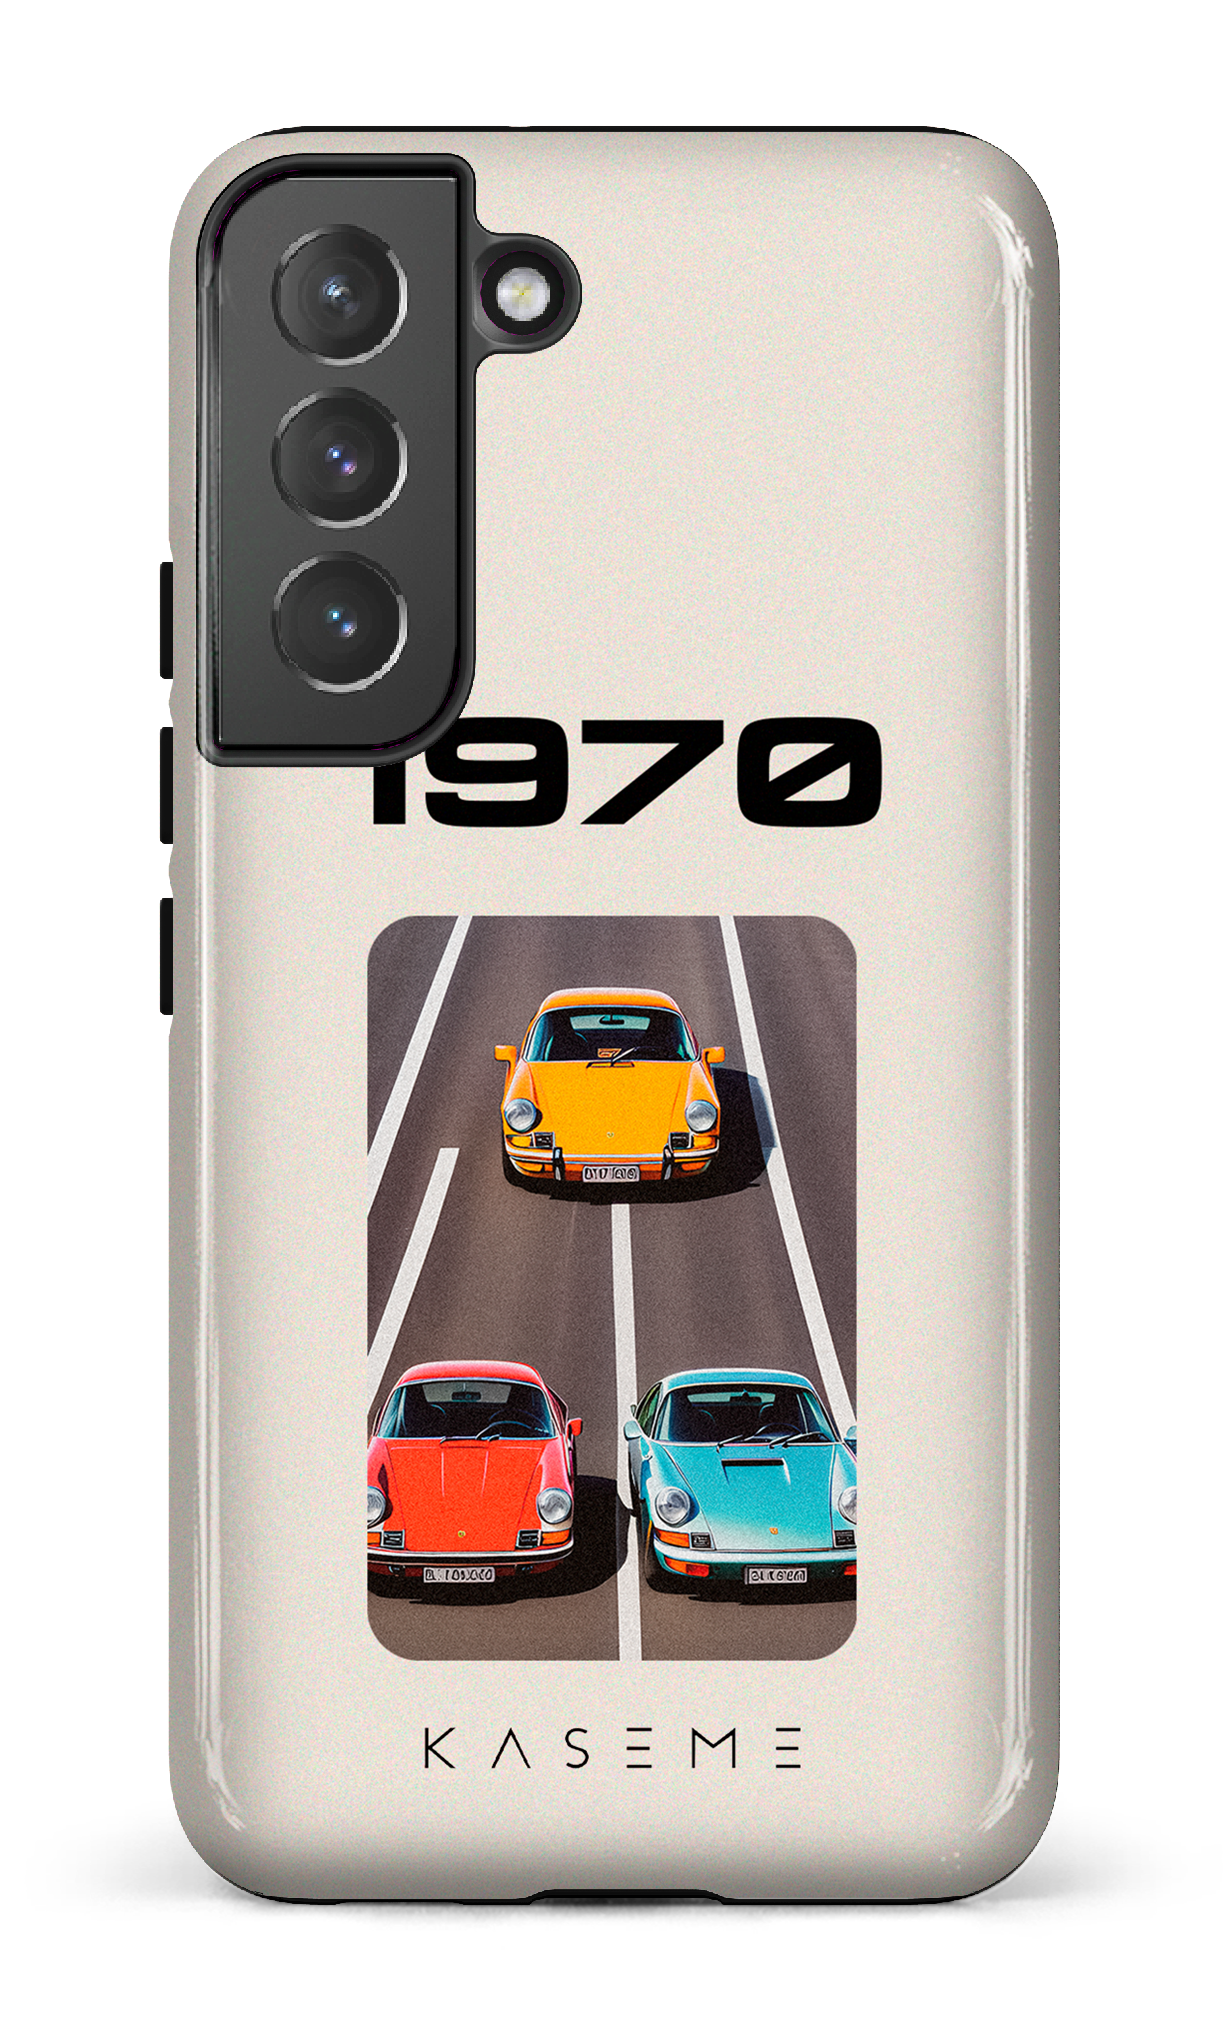 The 1970 - Galaxy S22